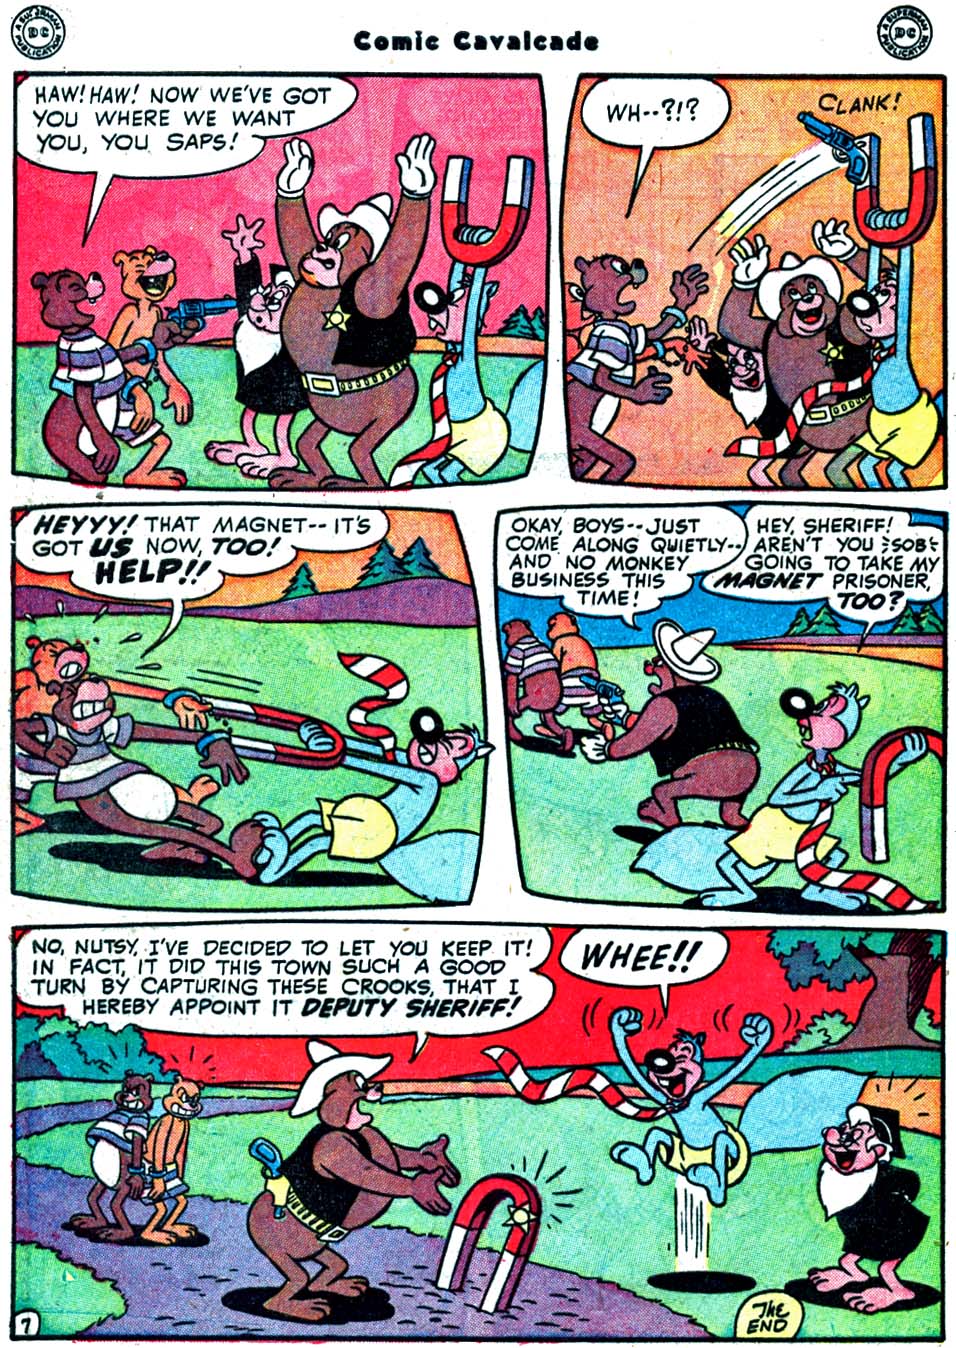 Comic Cavalcade issue 32 - Page 42